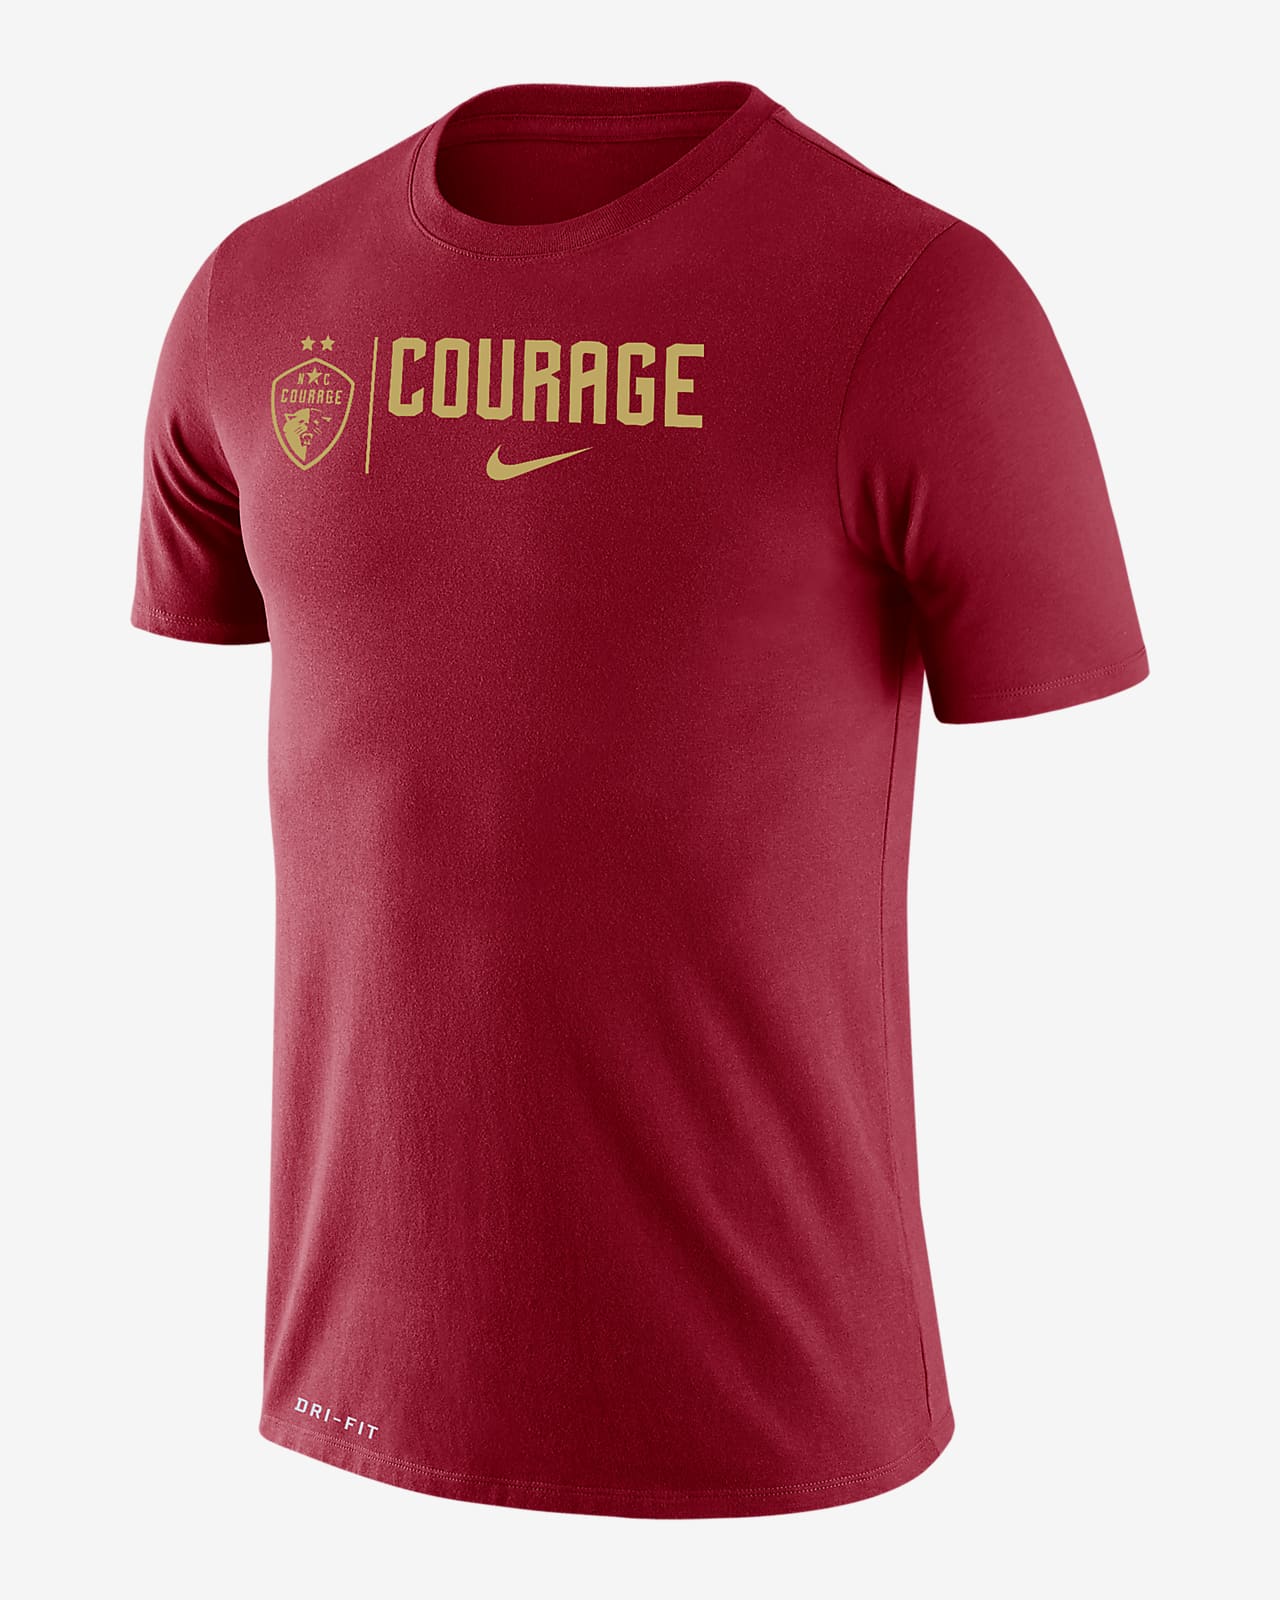 North Carolina Courage Legend Men's Nike Dri-FIT Soccer T-Shirt